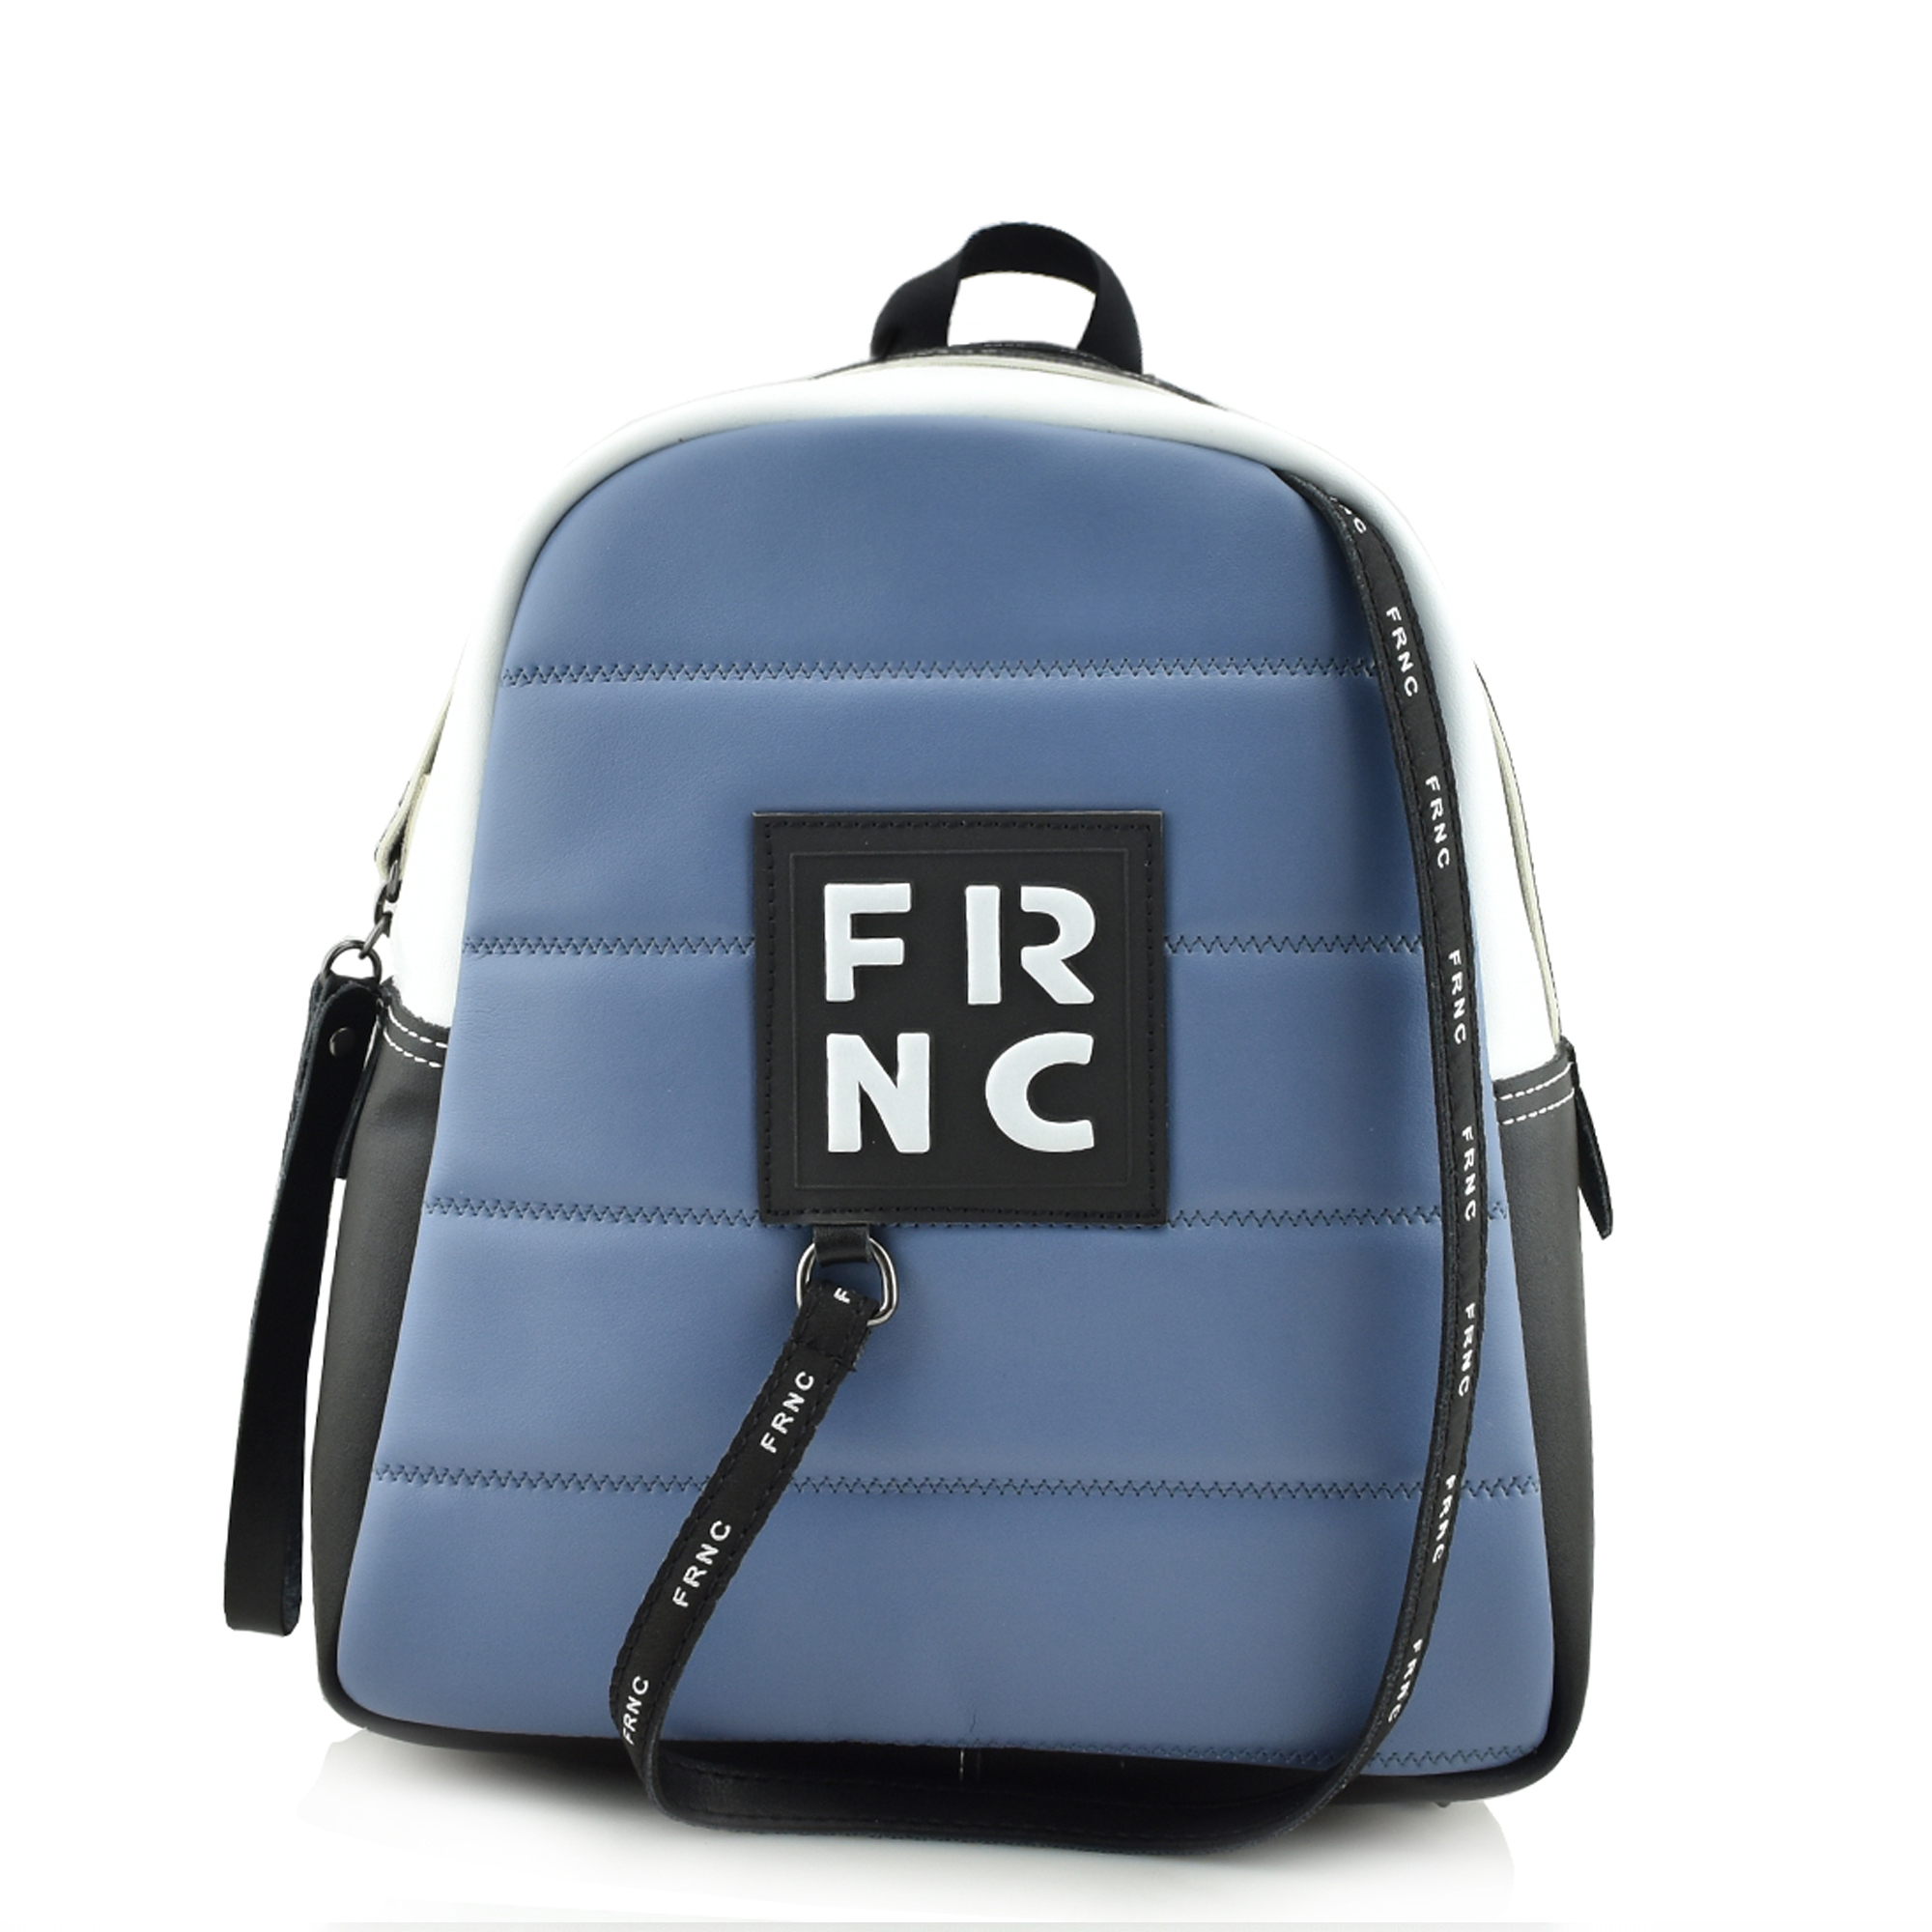 FRNC - FRANCESCO CLASSIC DOUBLE COLOR BACKPACK - 2132 BLUE